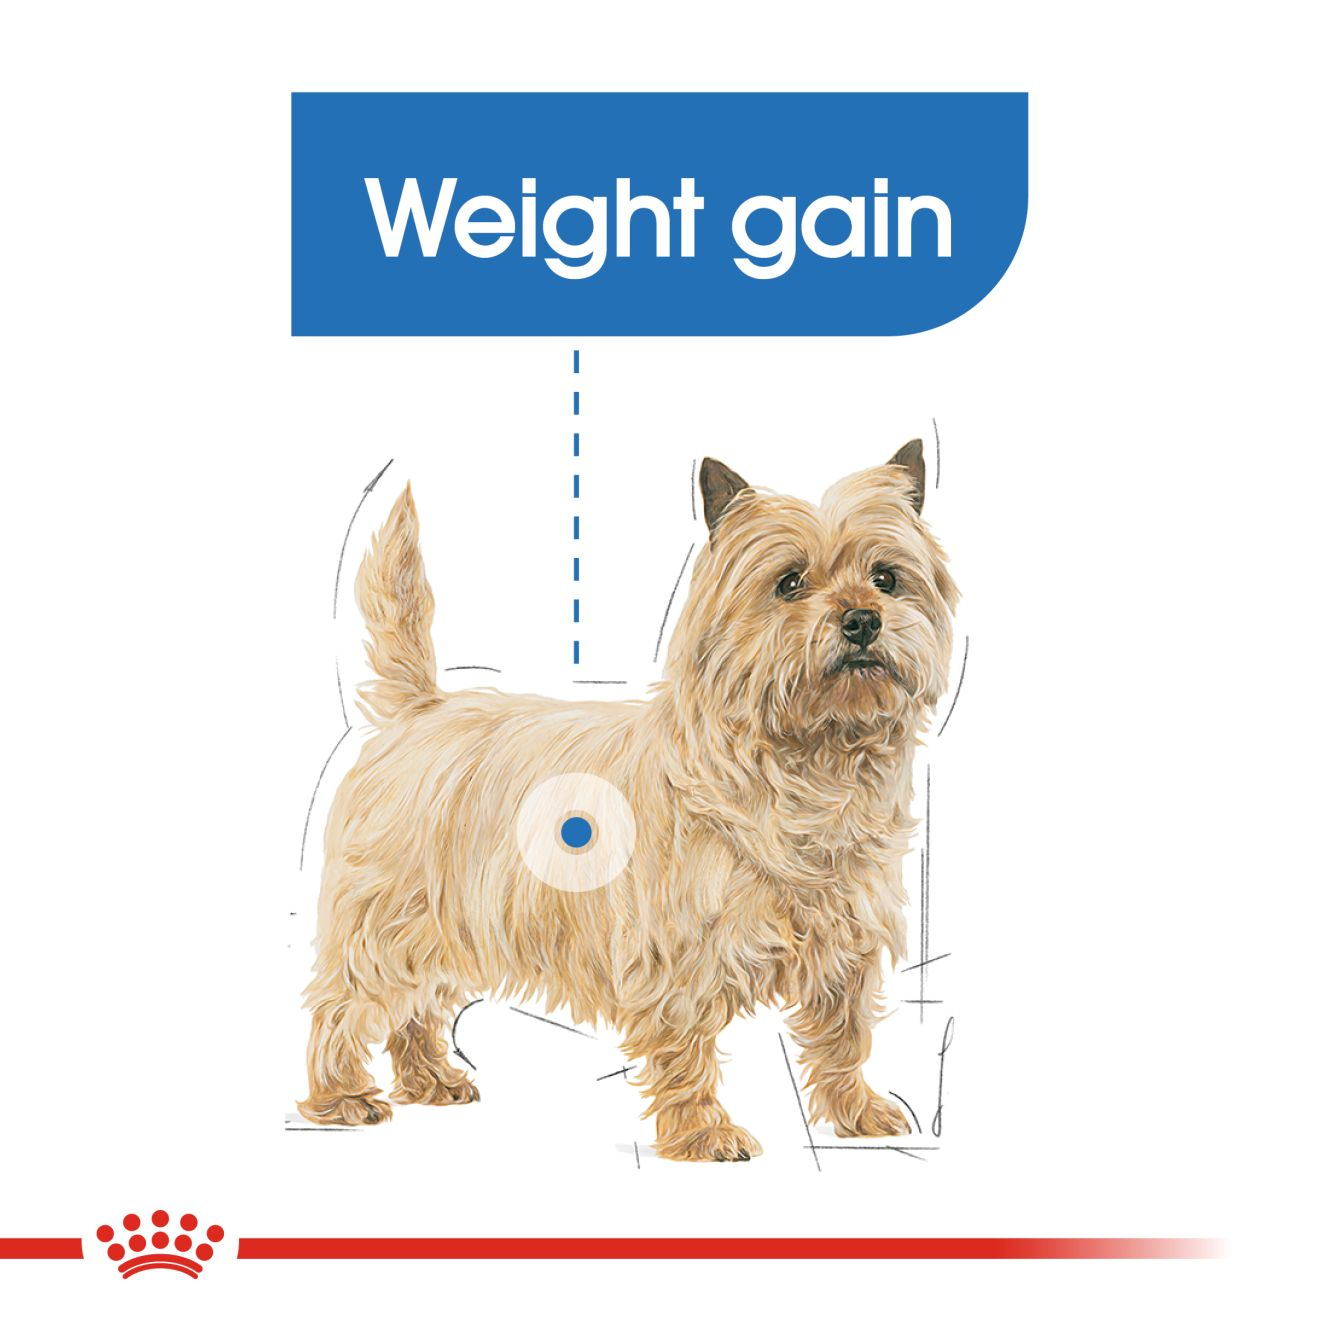 royal canin mini weight care